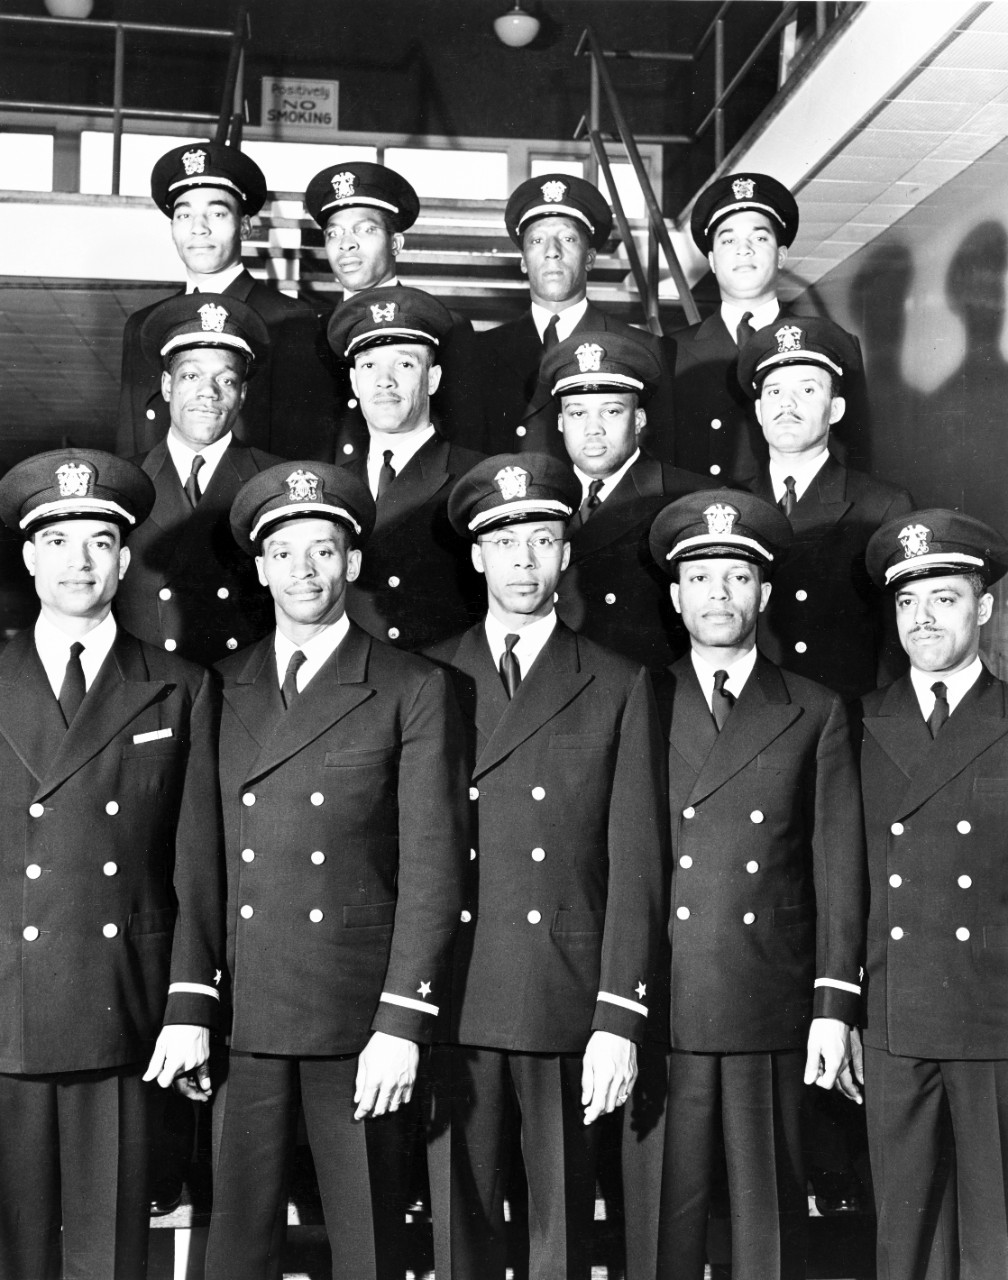 Formal portrait of thirteen African American men in Navy uniform standing in rows on stairs.